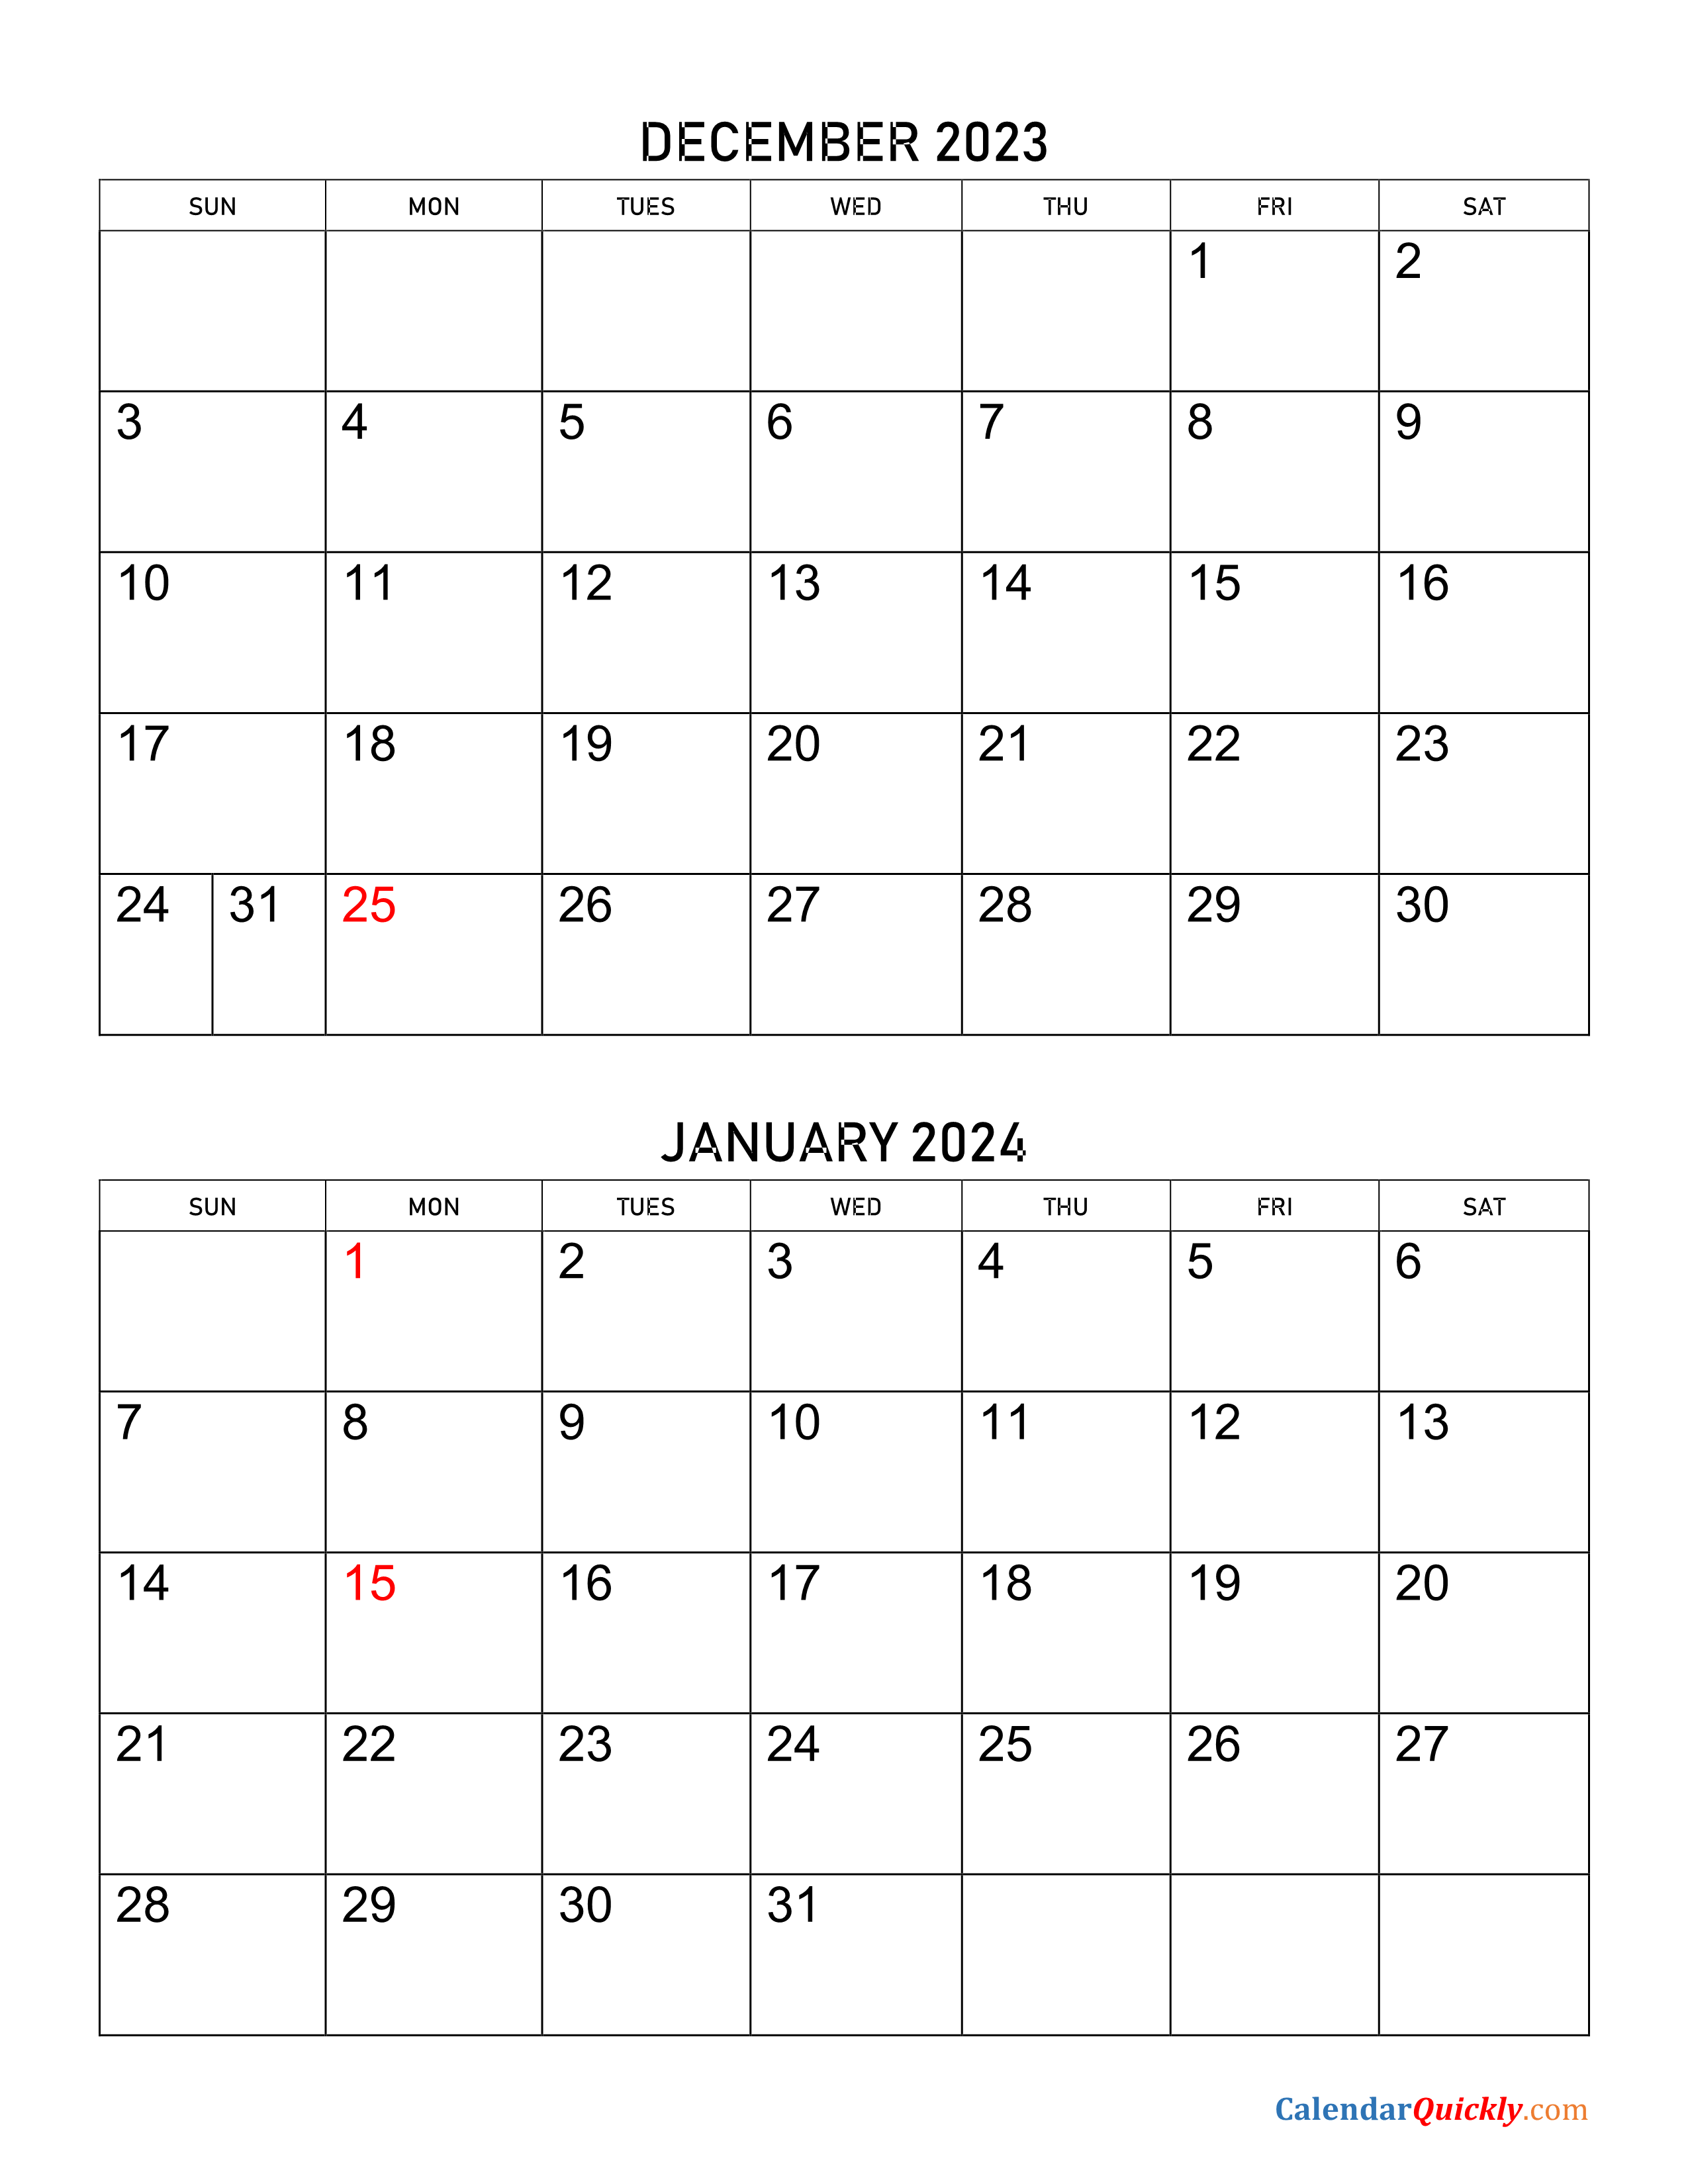 december-2023-and-january-2024-calendar-calendar-quickly